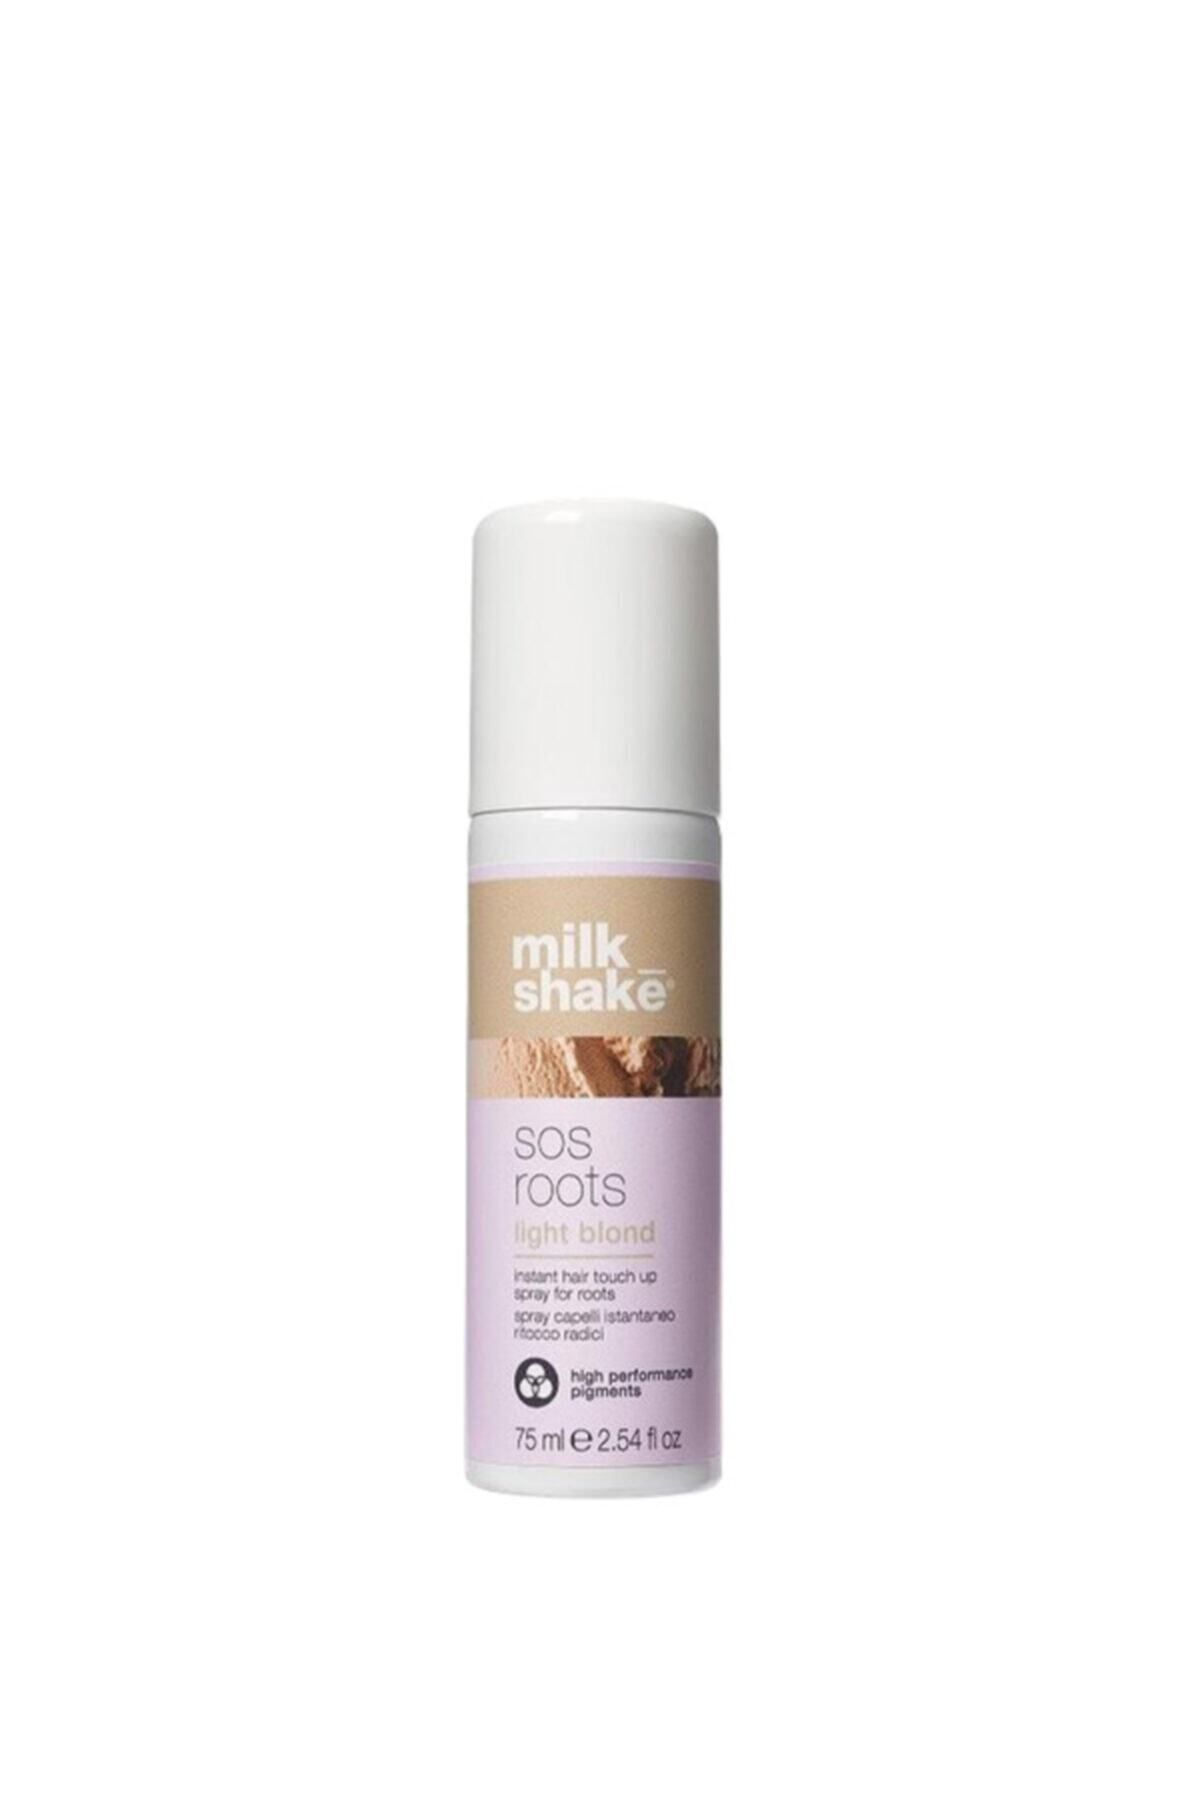 Milkshake Milk Shake Sost Roots Light Blond 75ml